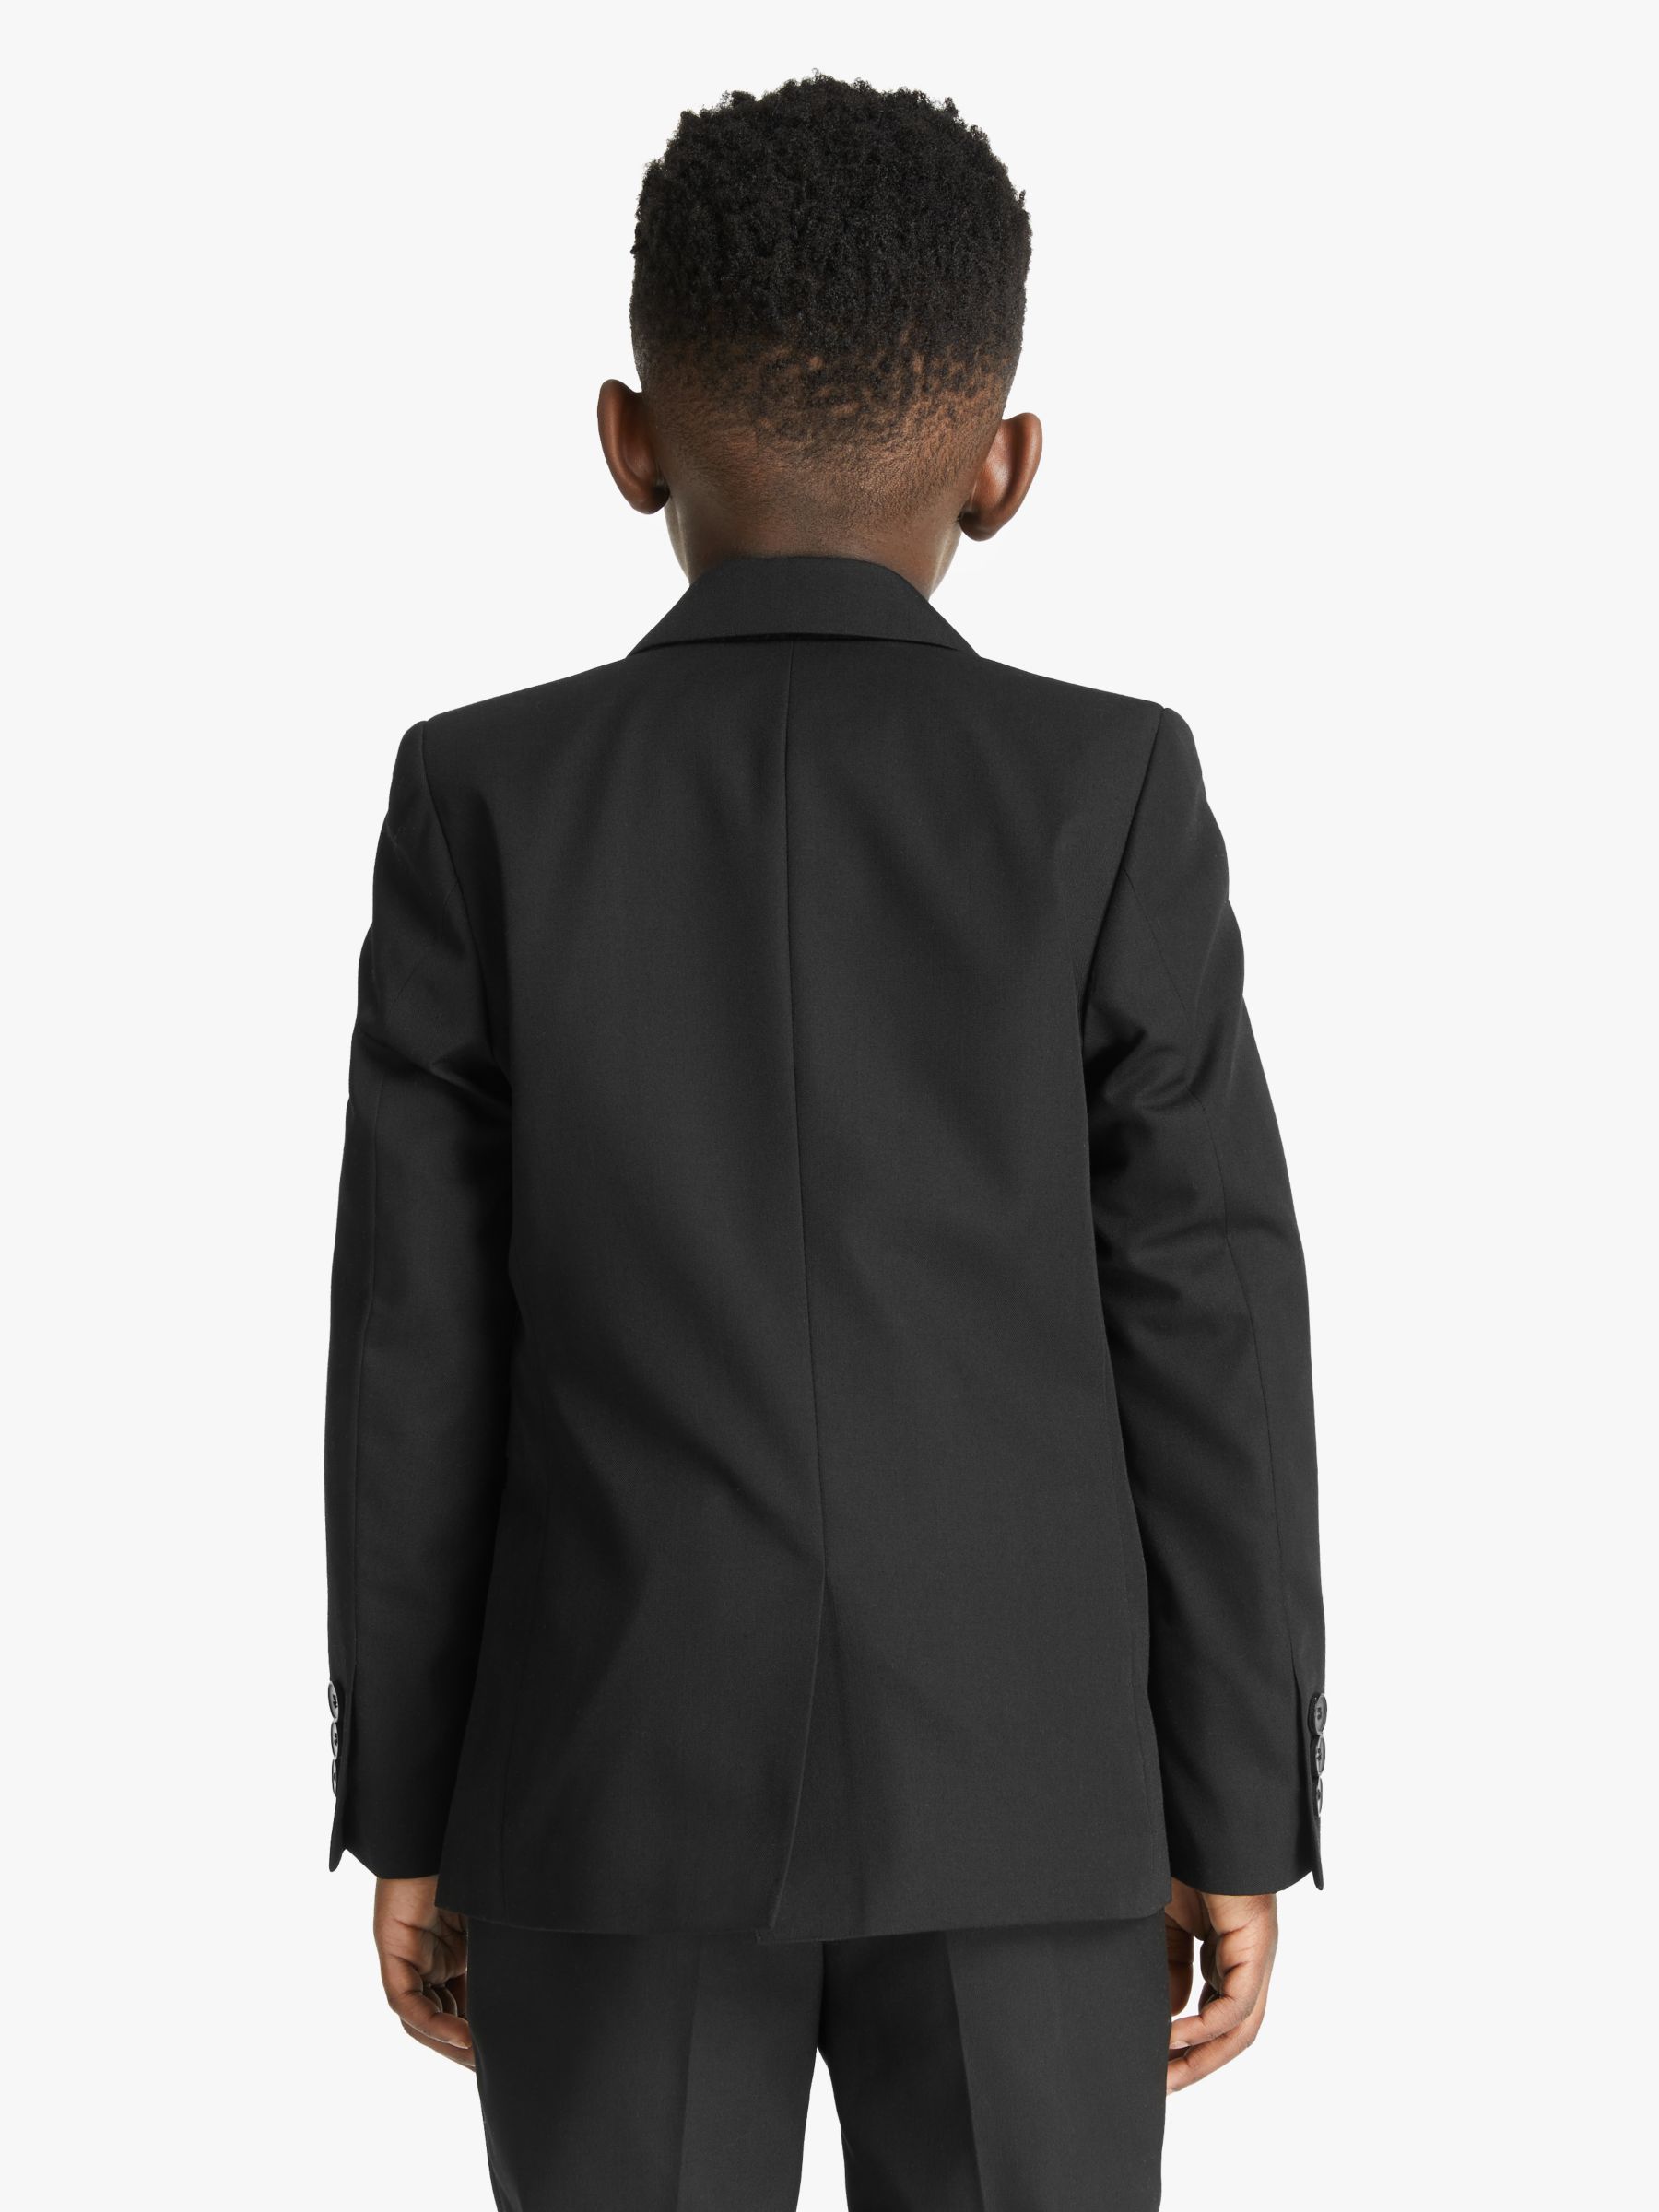 John Lewis Heirloom Collection Kids' Tuxedo Jacket, Black, 2 years